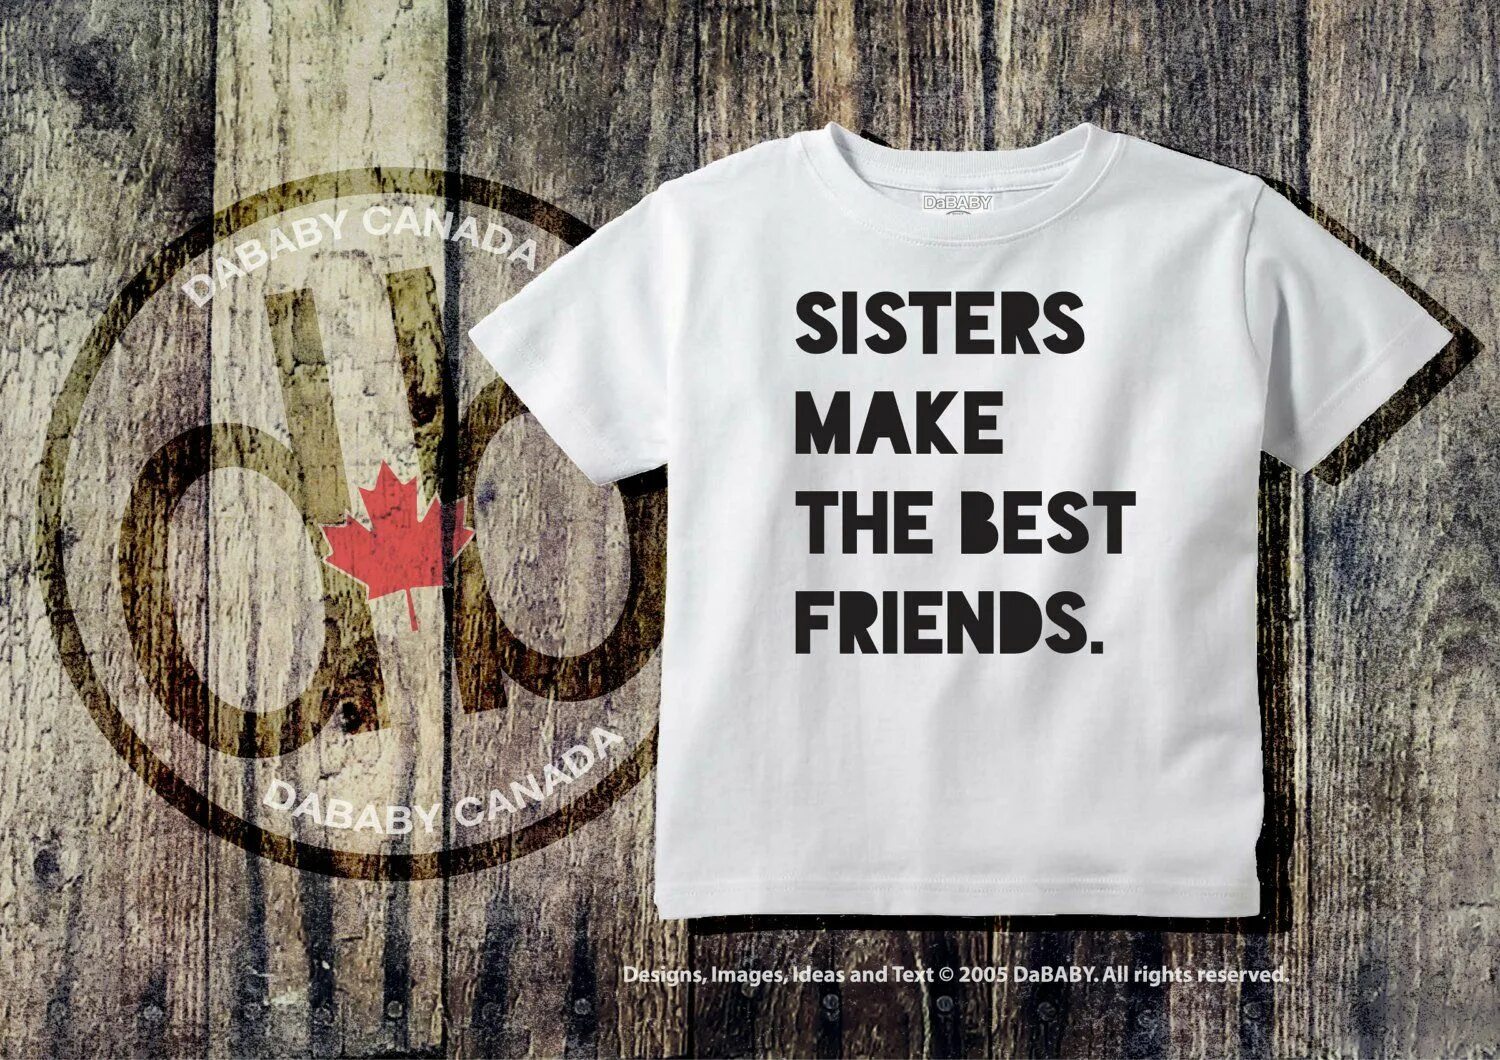 I Love my best friend футболка. Бест френд футболка. Футболка Хард френдс. Футболка friends Фрейд. Making of sisters